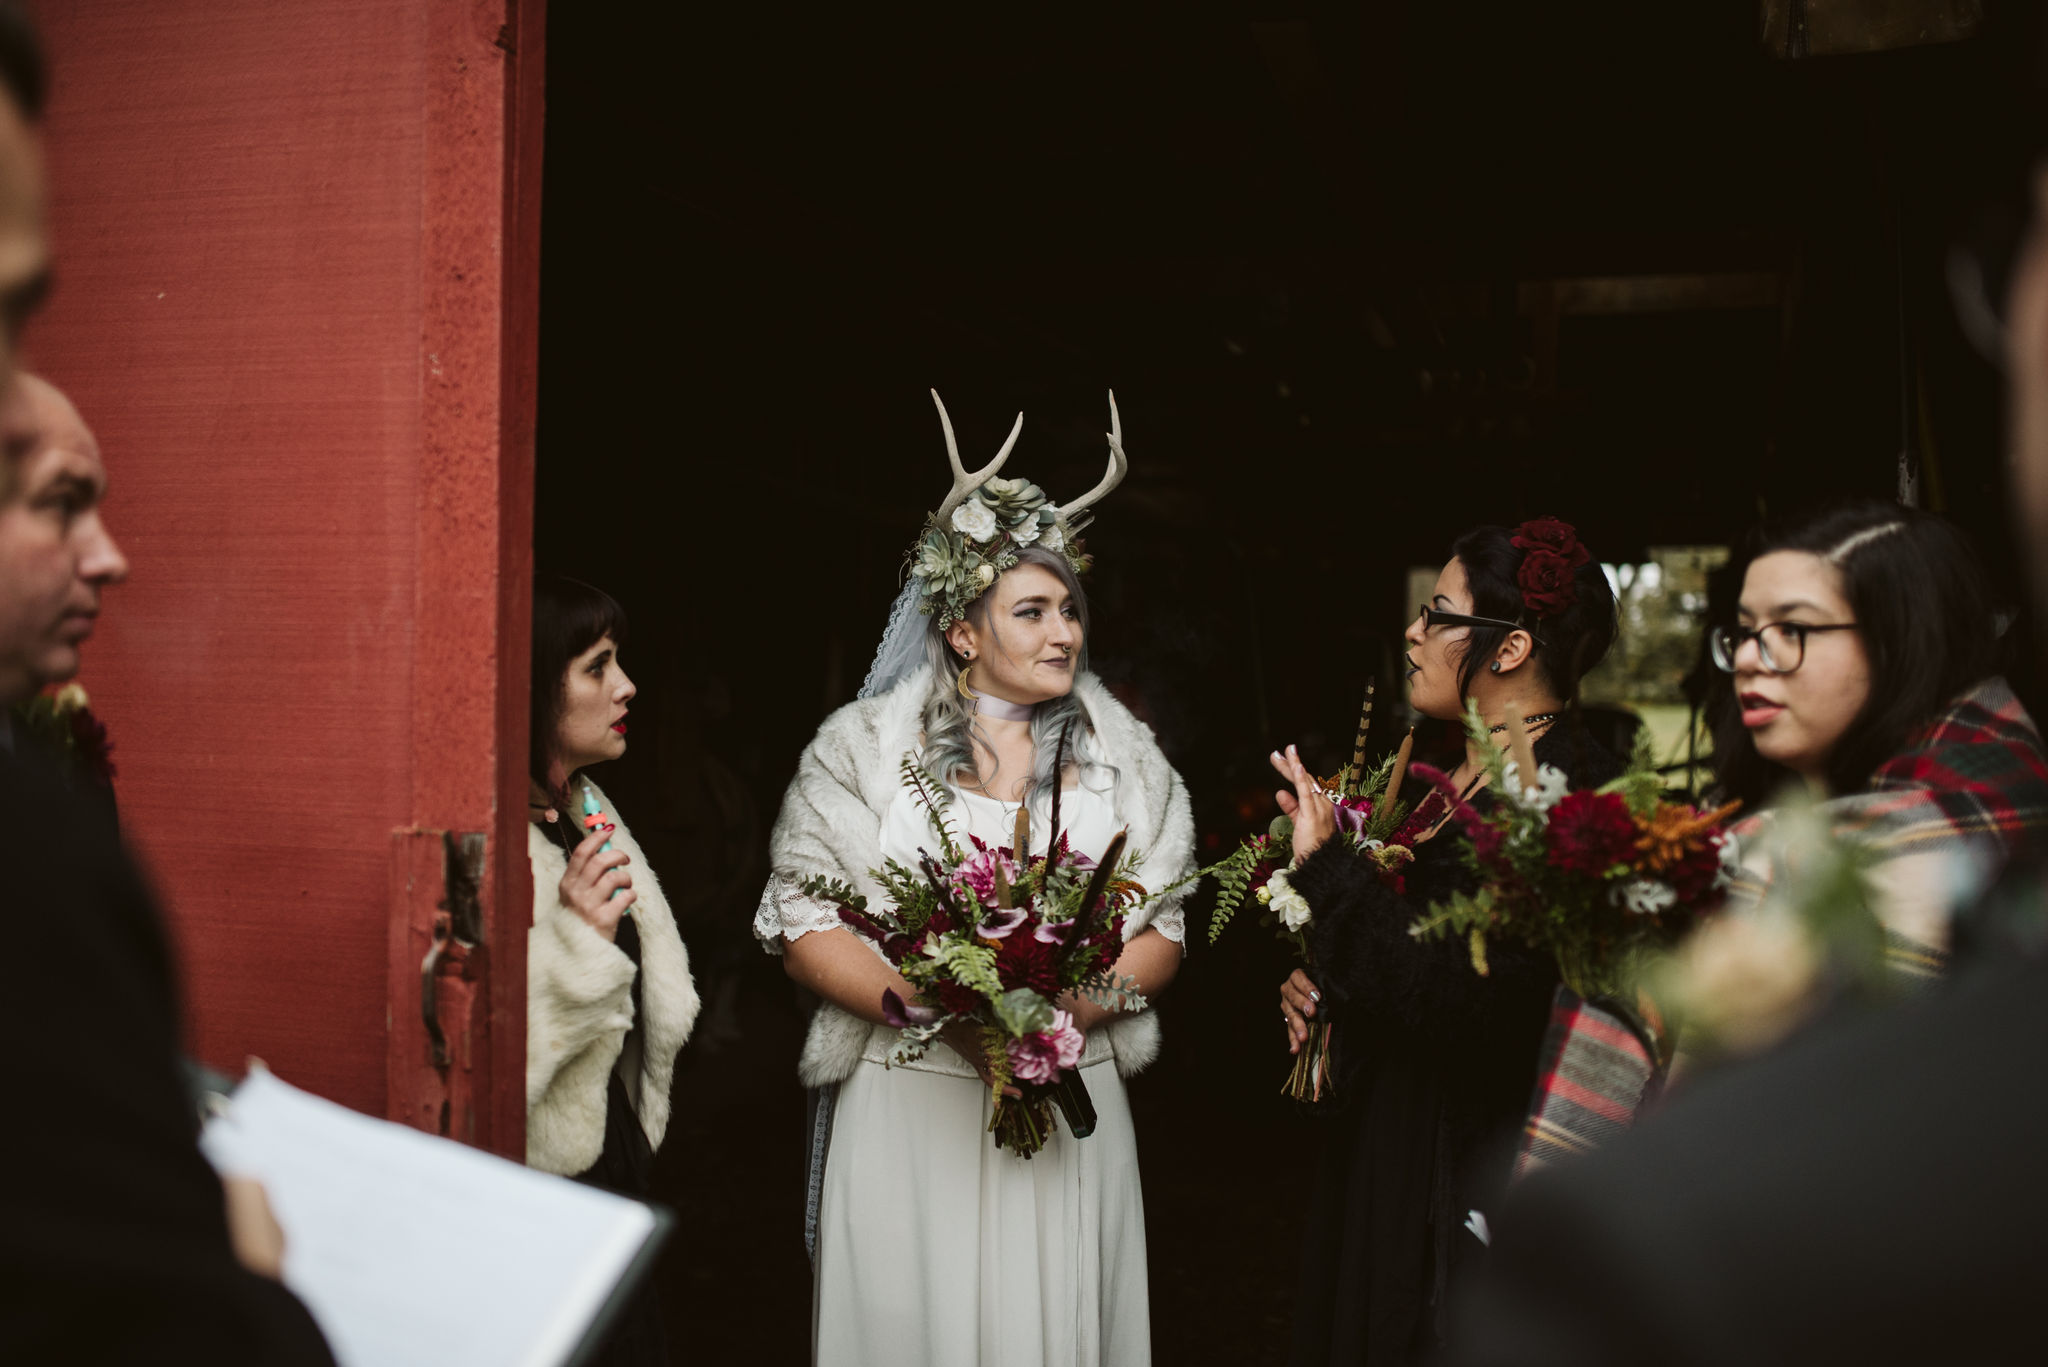  Maryland, Baltimore Wedding Photographer, Backyard Wedding, Fall, October, Dark Bohemian, Whimsical, Fun, Bride Preparing to Walk Down the Aisle with Bridesmaids, Flower Crown 